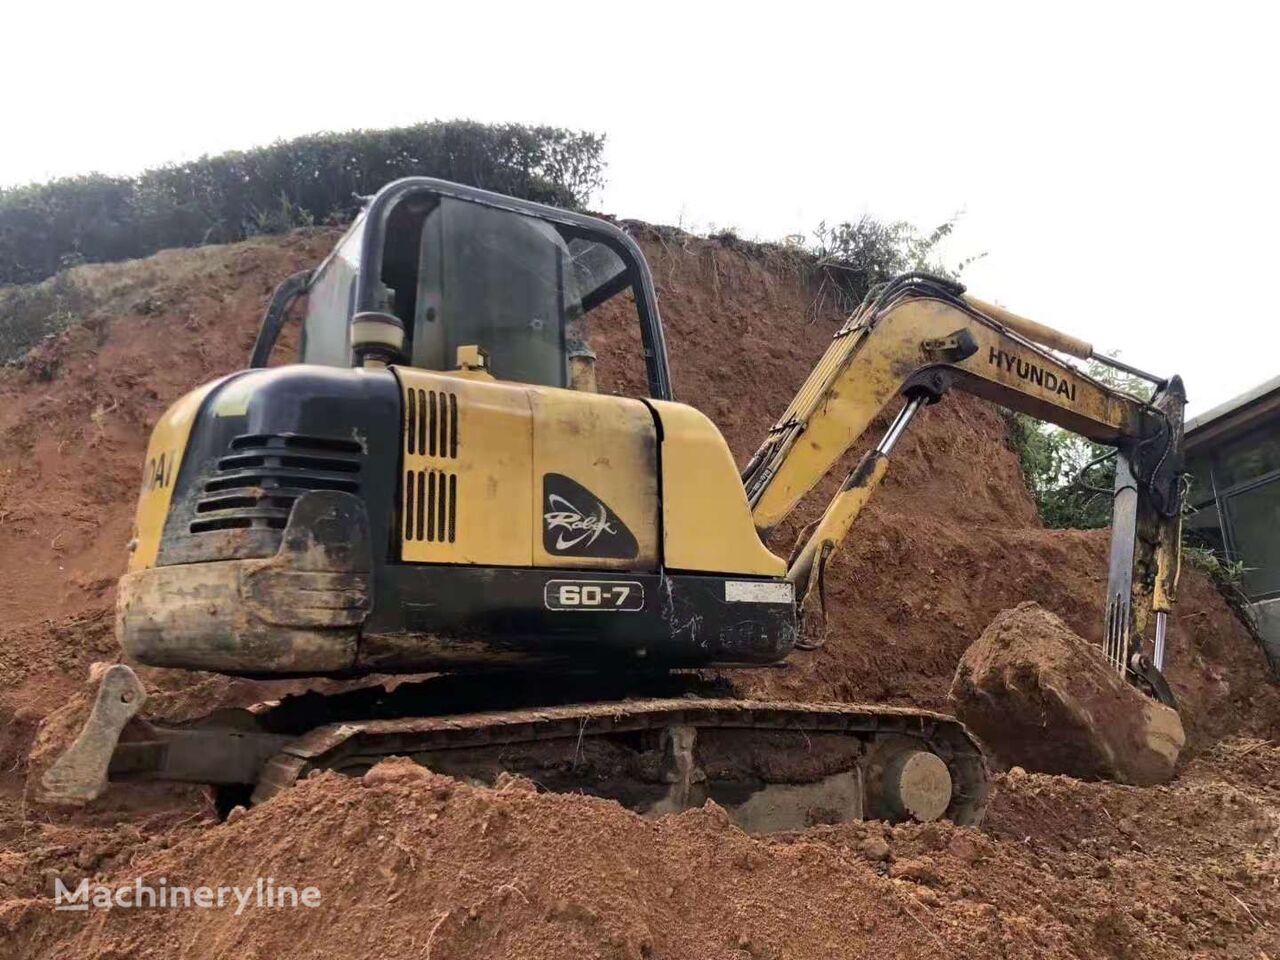 Hyundai R60 tracked excavator